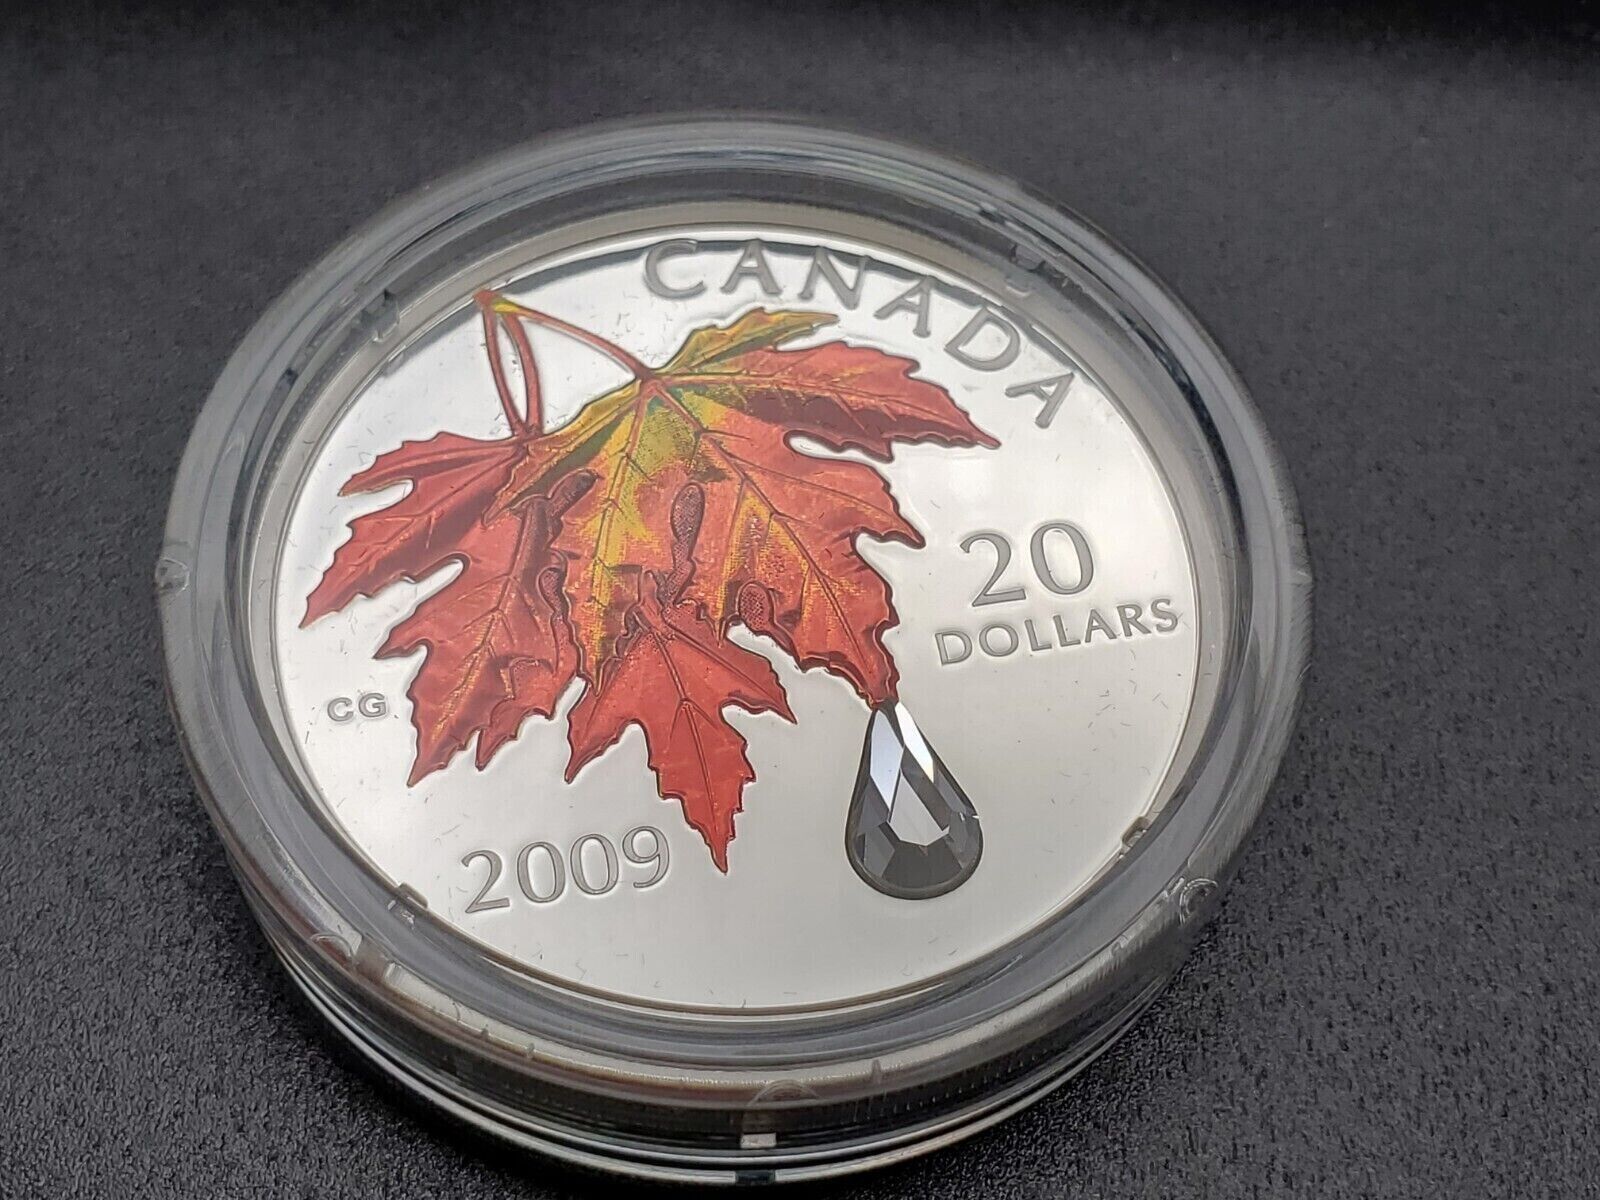 1 Oz Silver Coin 2009 $20 Canada Crystal Raindrop Swarovski Autumn Maple Leaves-classypw.com-2